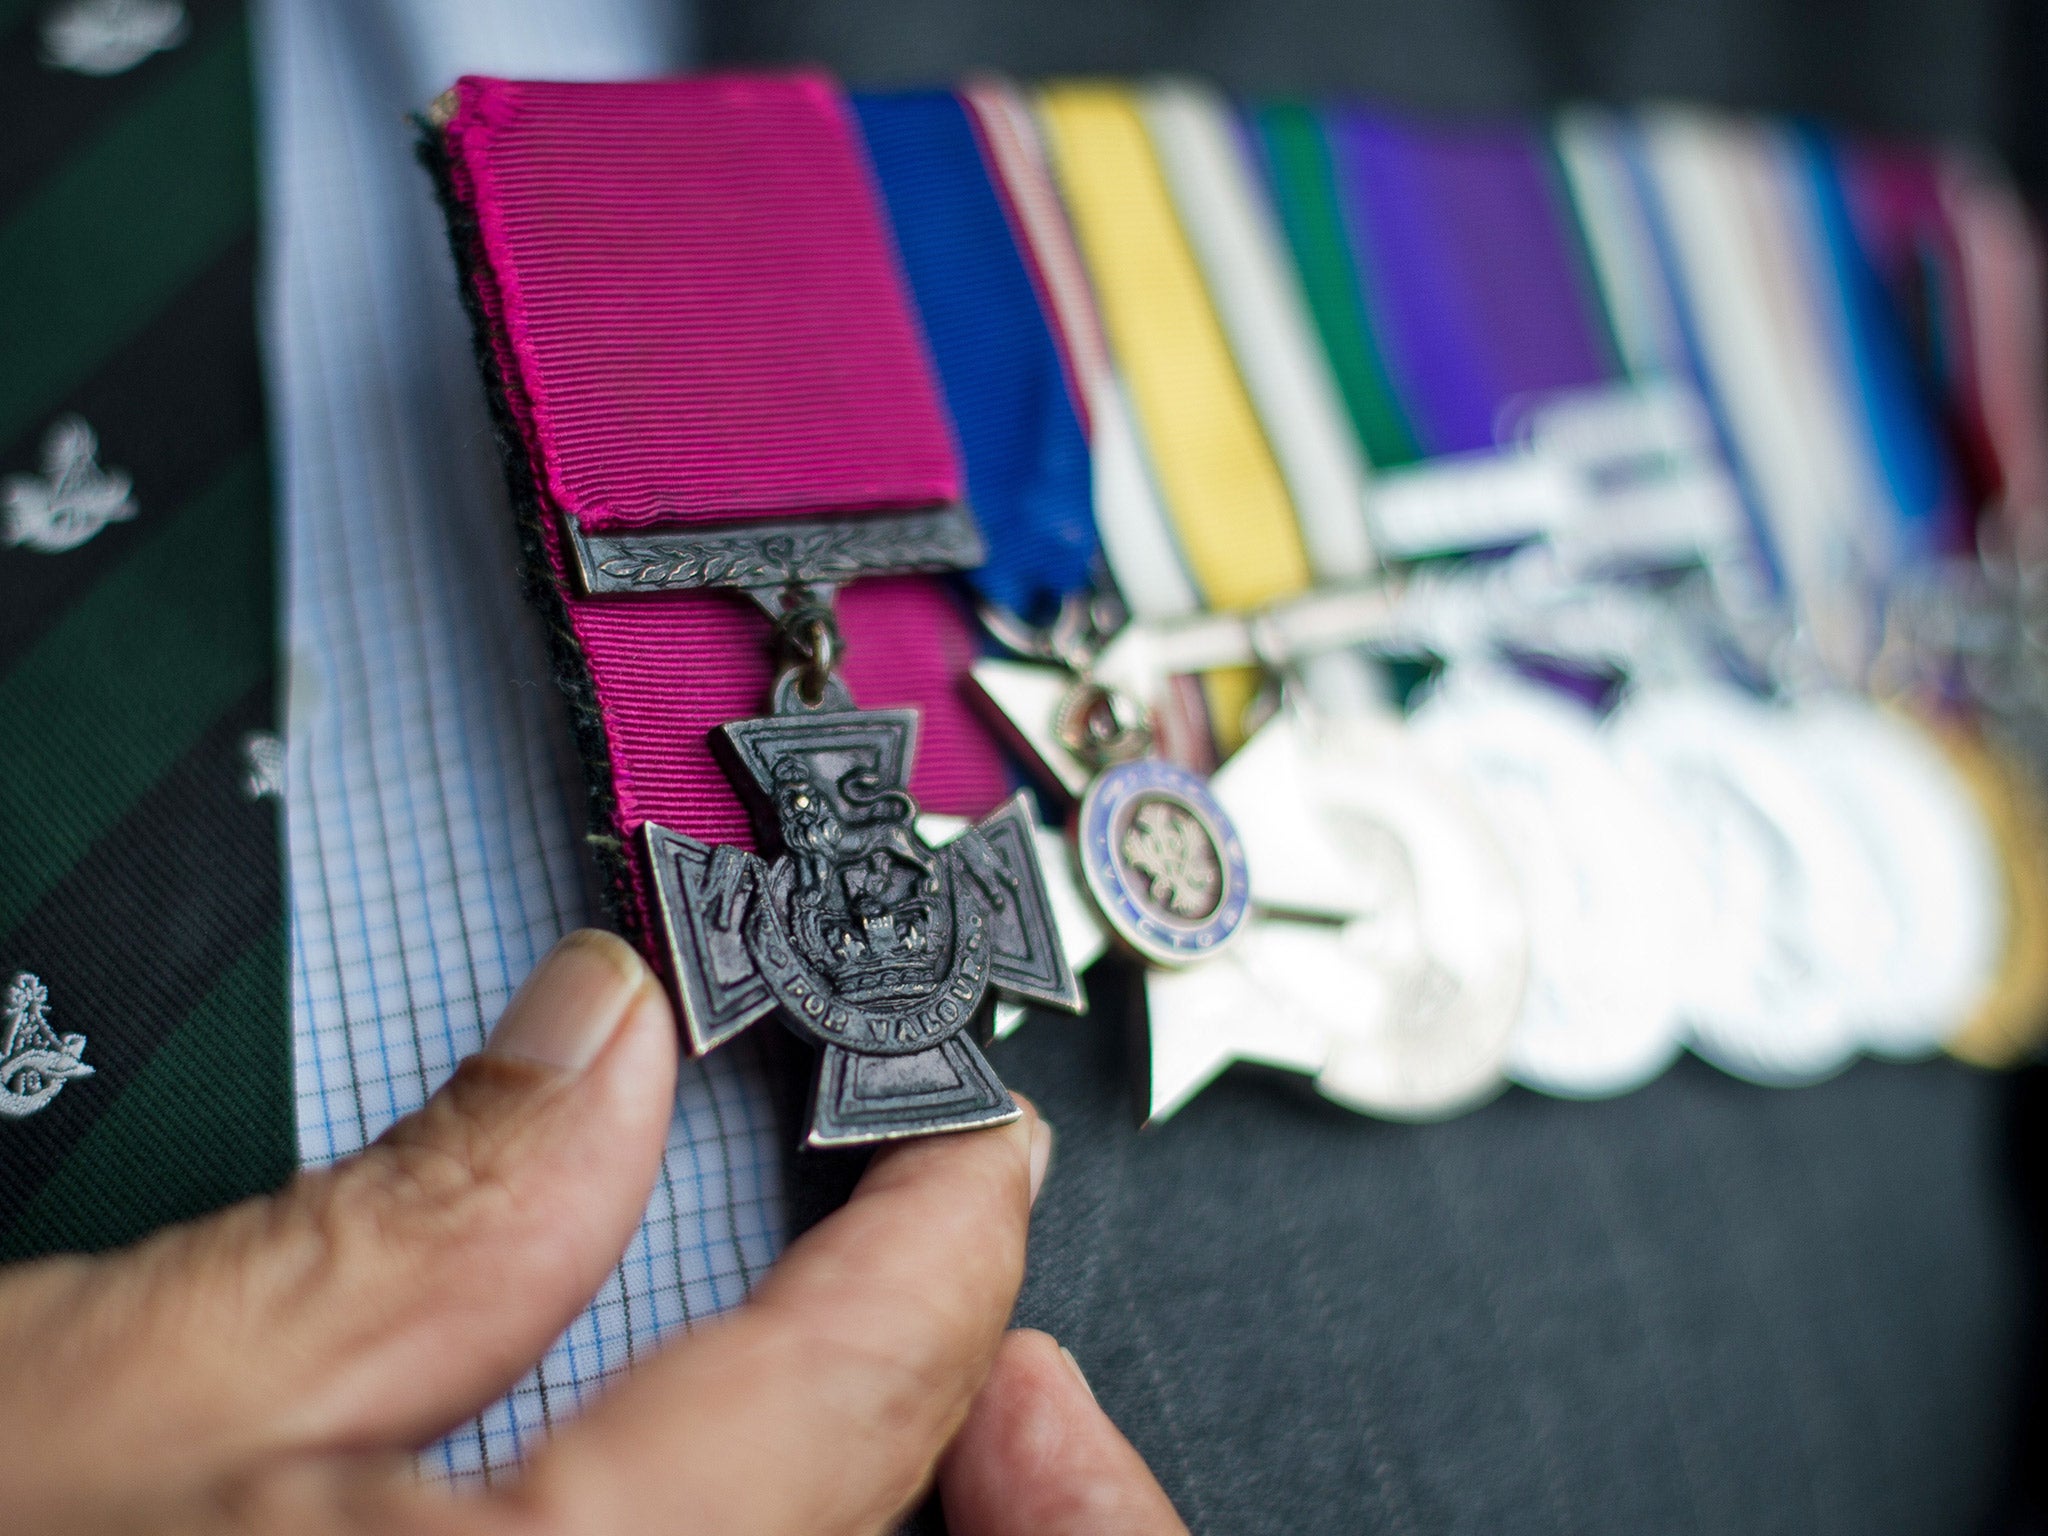 A Victoria Cross recipient handles the award on his lapel. File photo